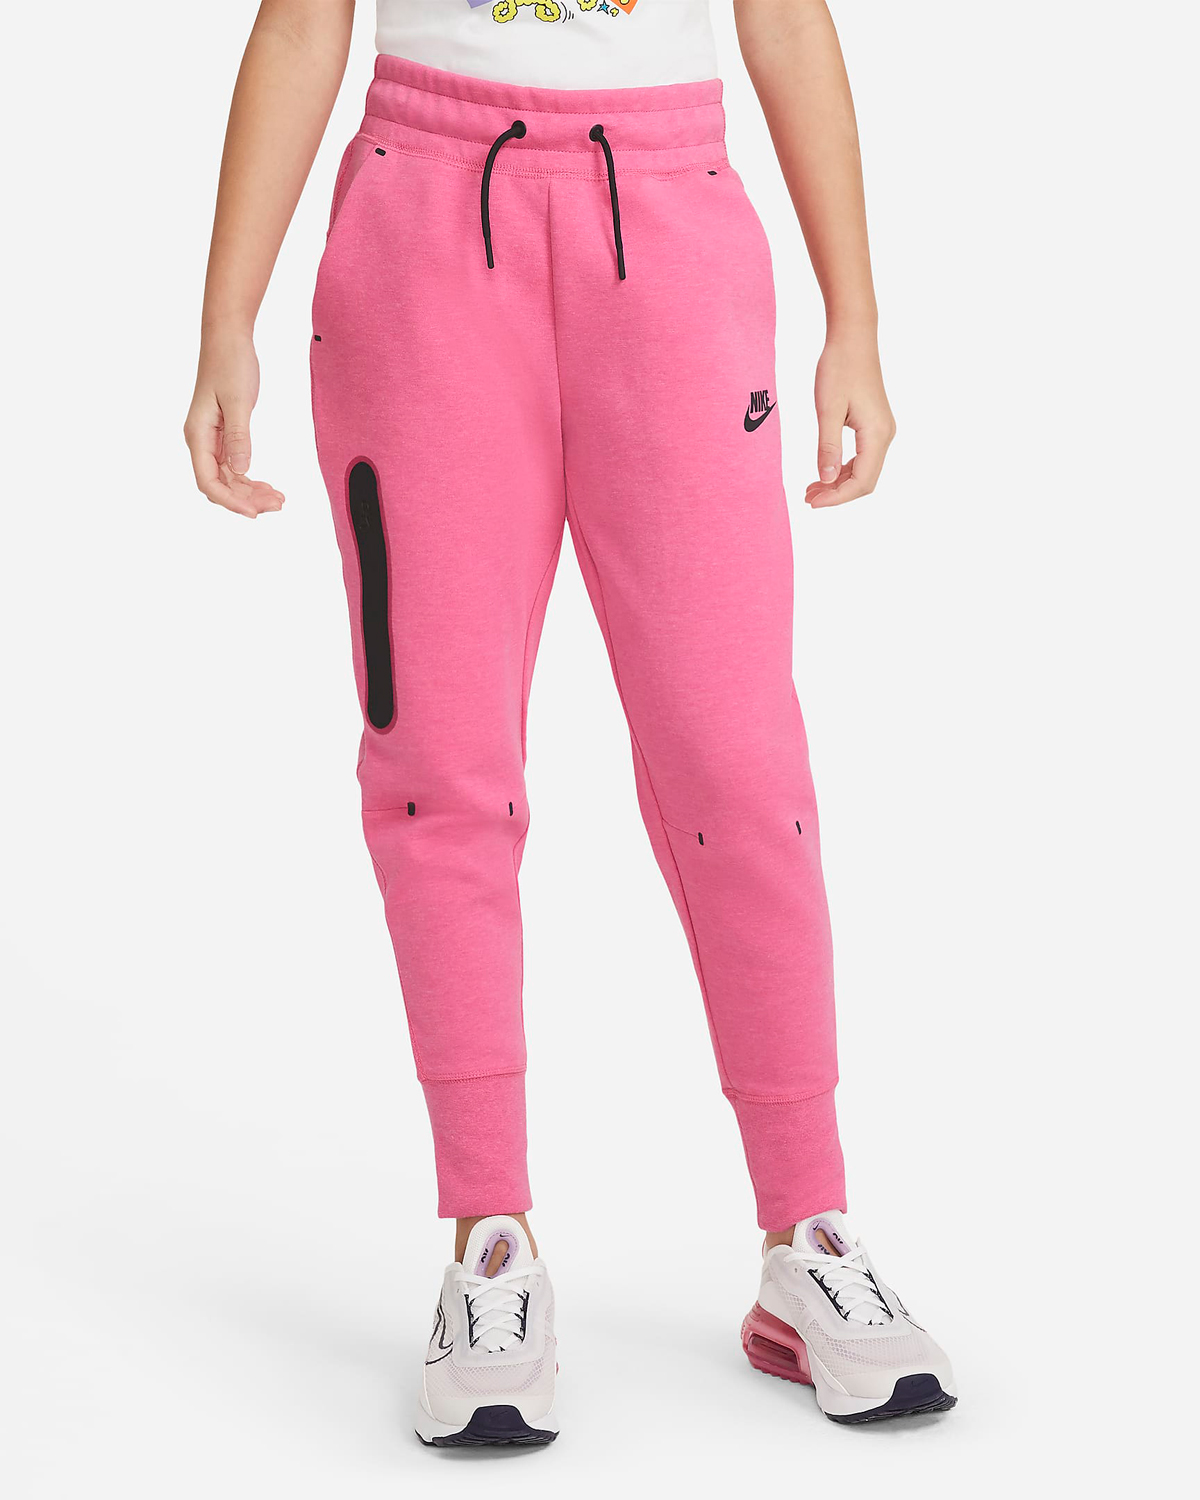 Air Jordan 5 Pinksicle WNBA Shirts Clothing Outfits